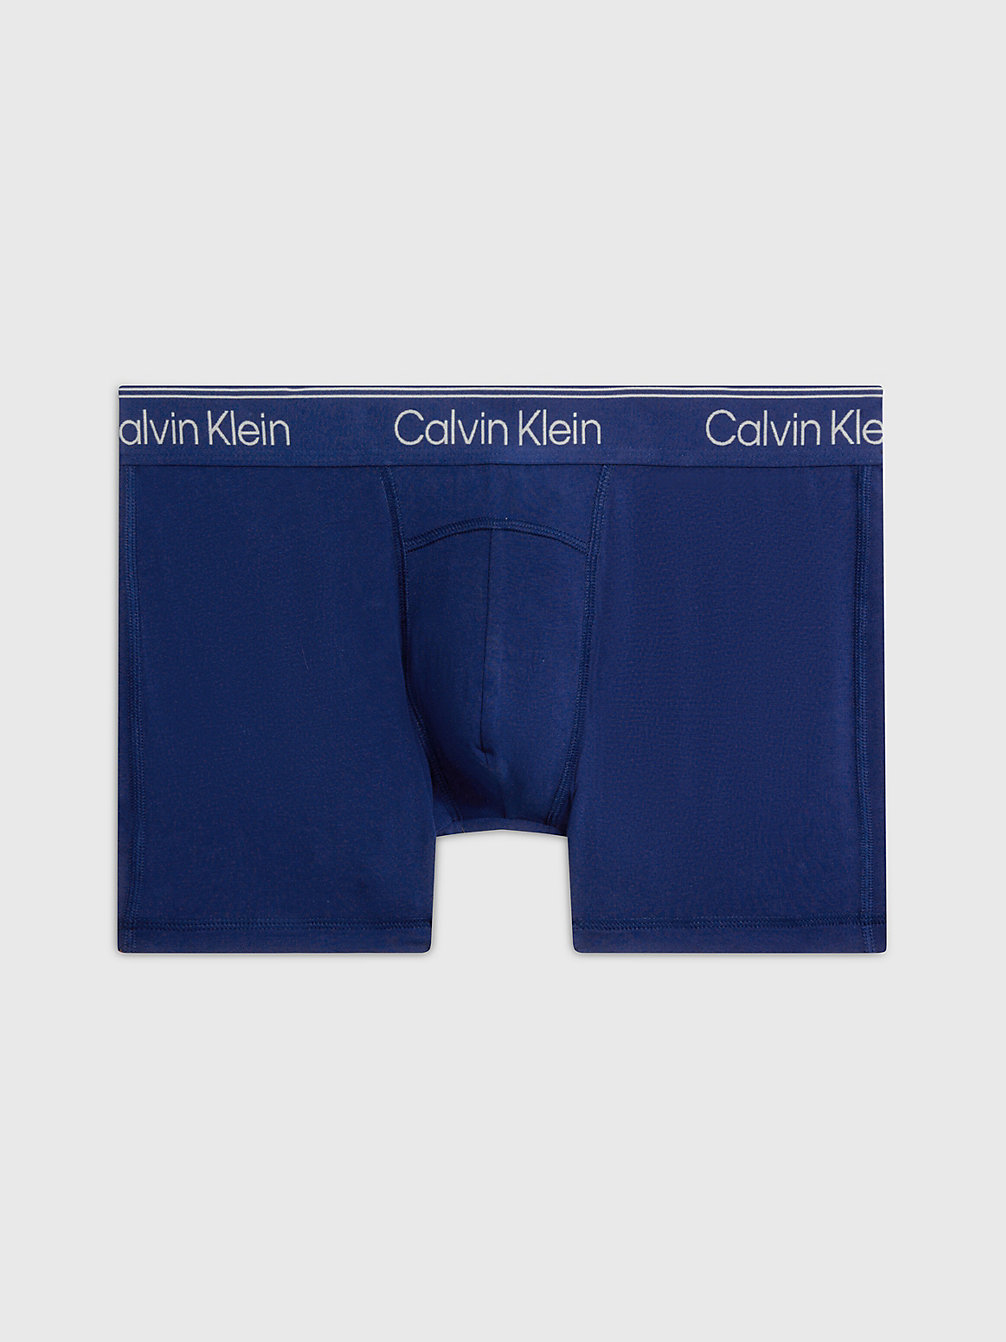 Bóxers - Athletic Cotton > BLUE DEPTHS > undefined hombre > Calvin Klein